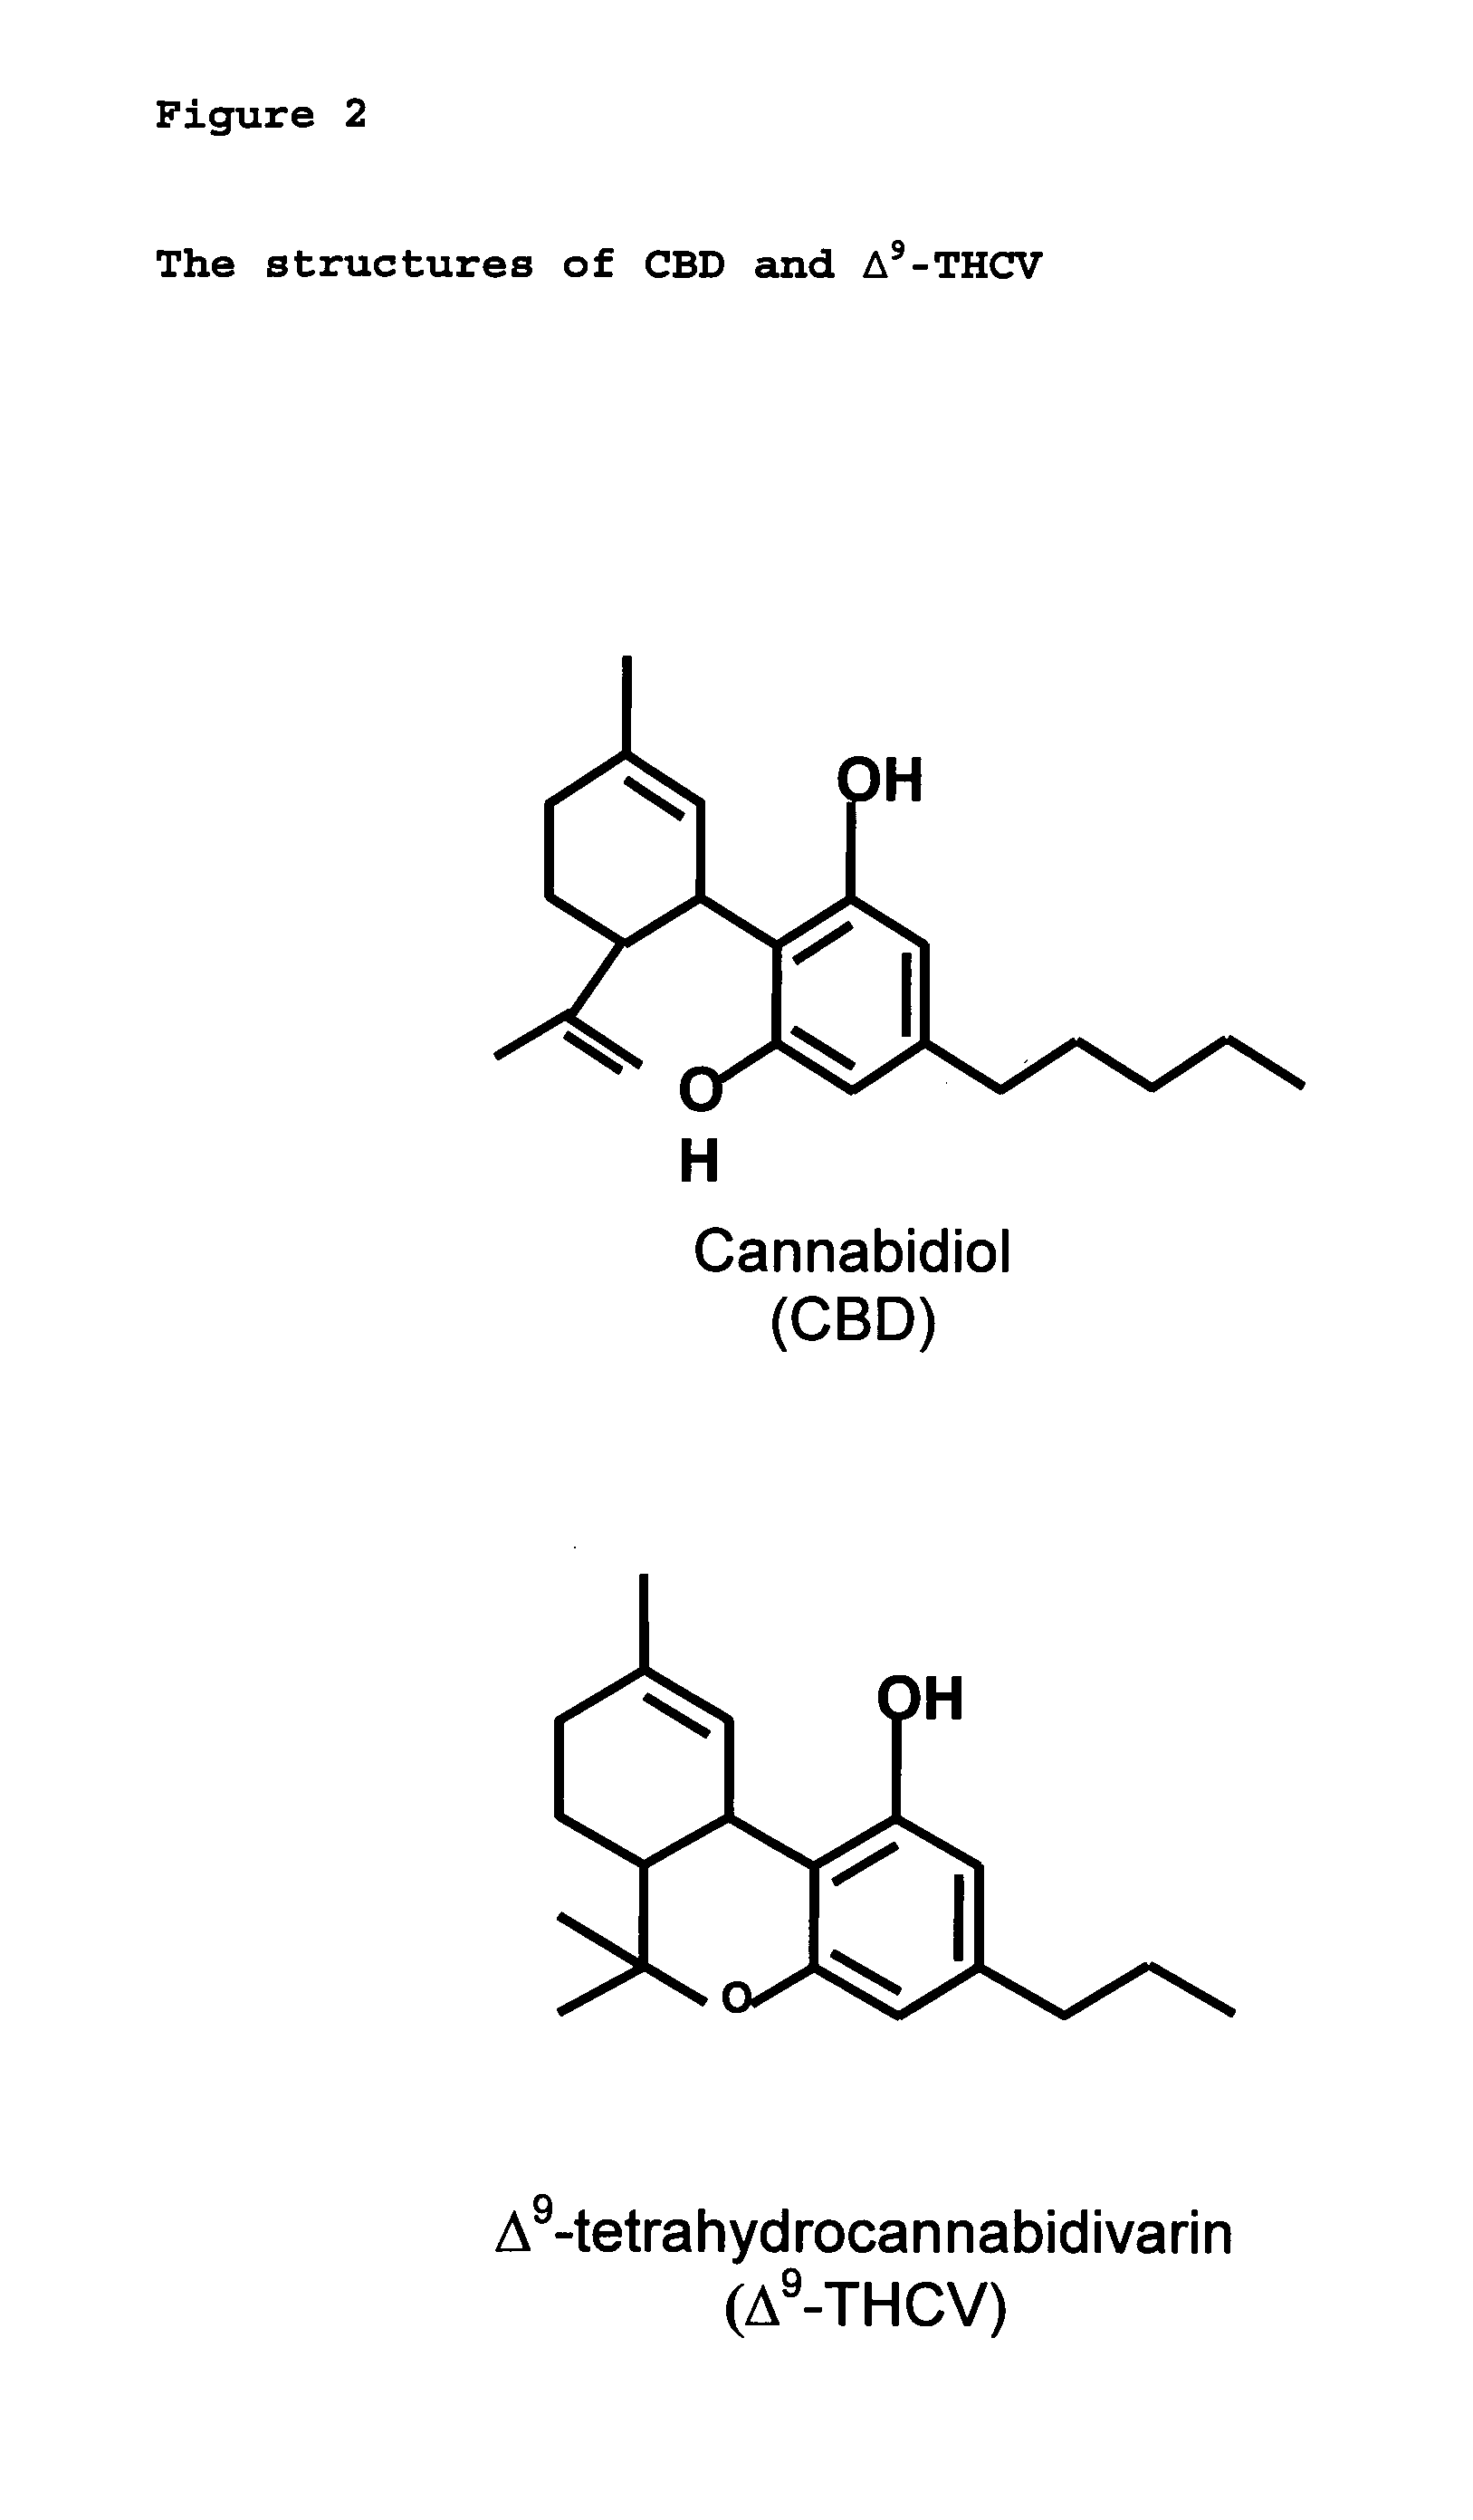 New pharmaceutical formulation comprising cannabidiol and tetrahydrocannabidivarin